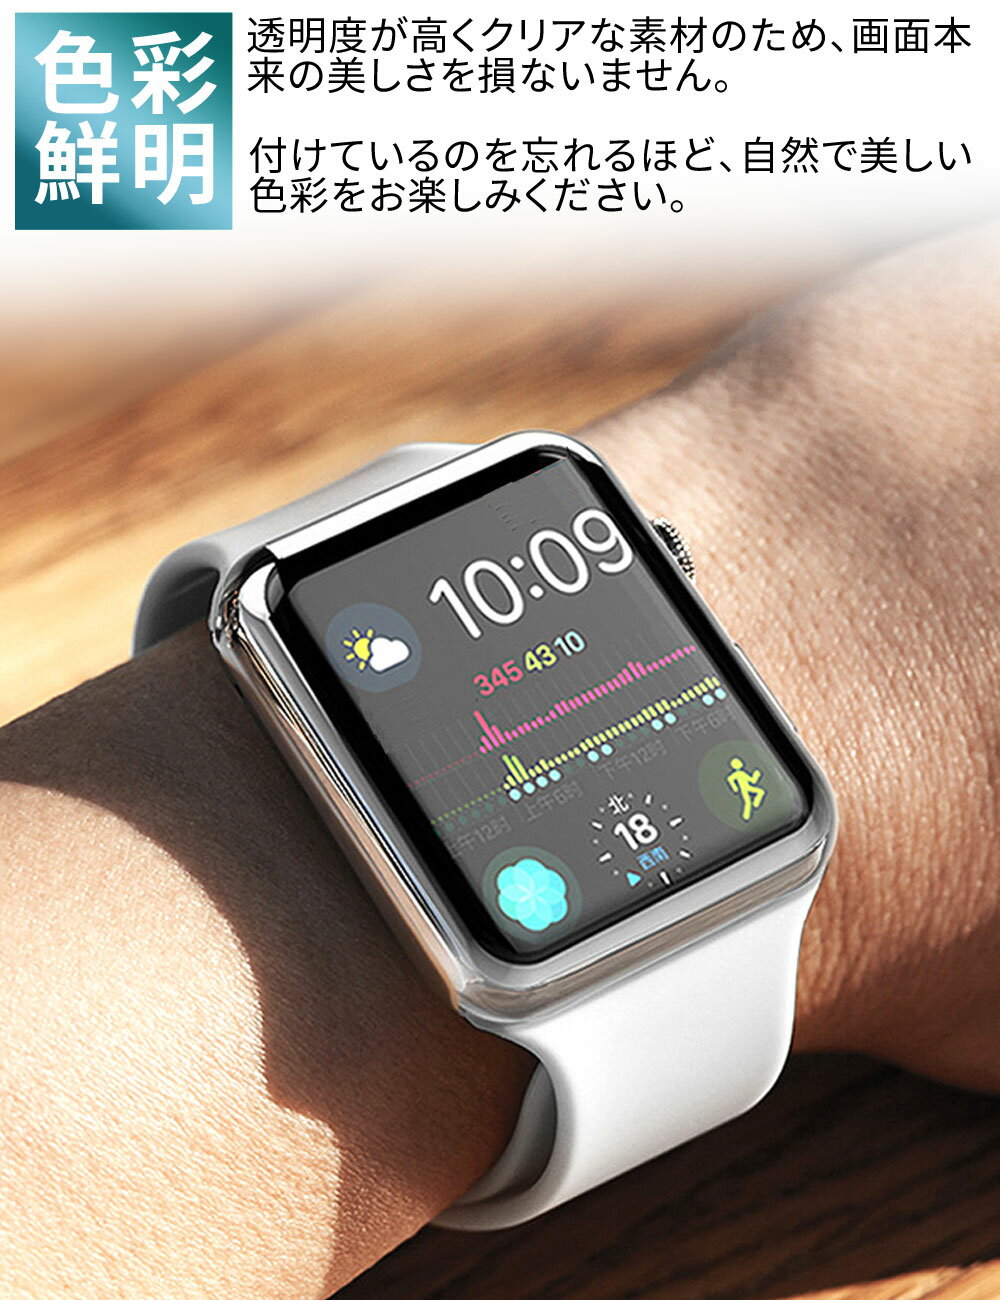 Apple Watch SE 44mm ケース カバー m0b